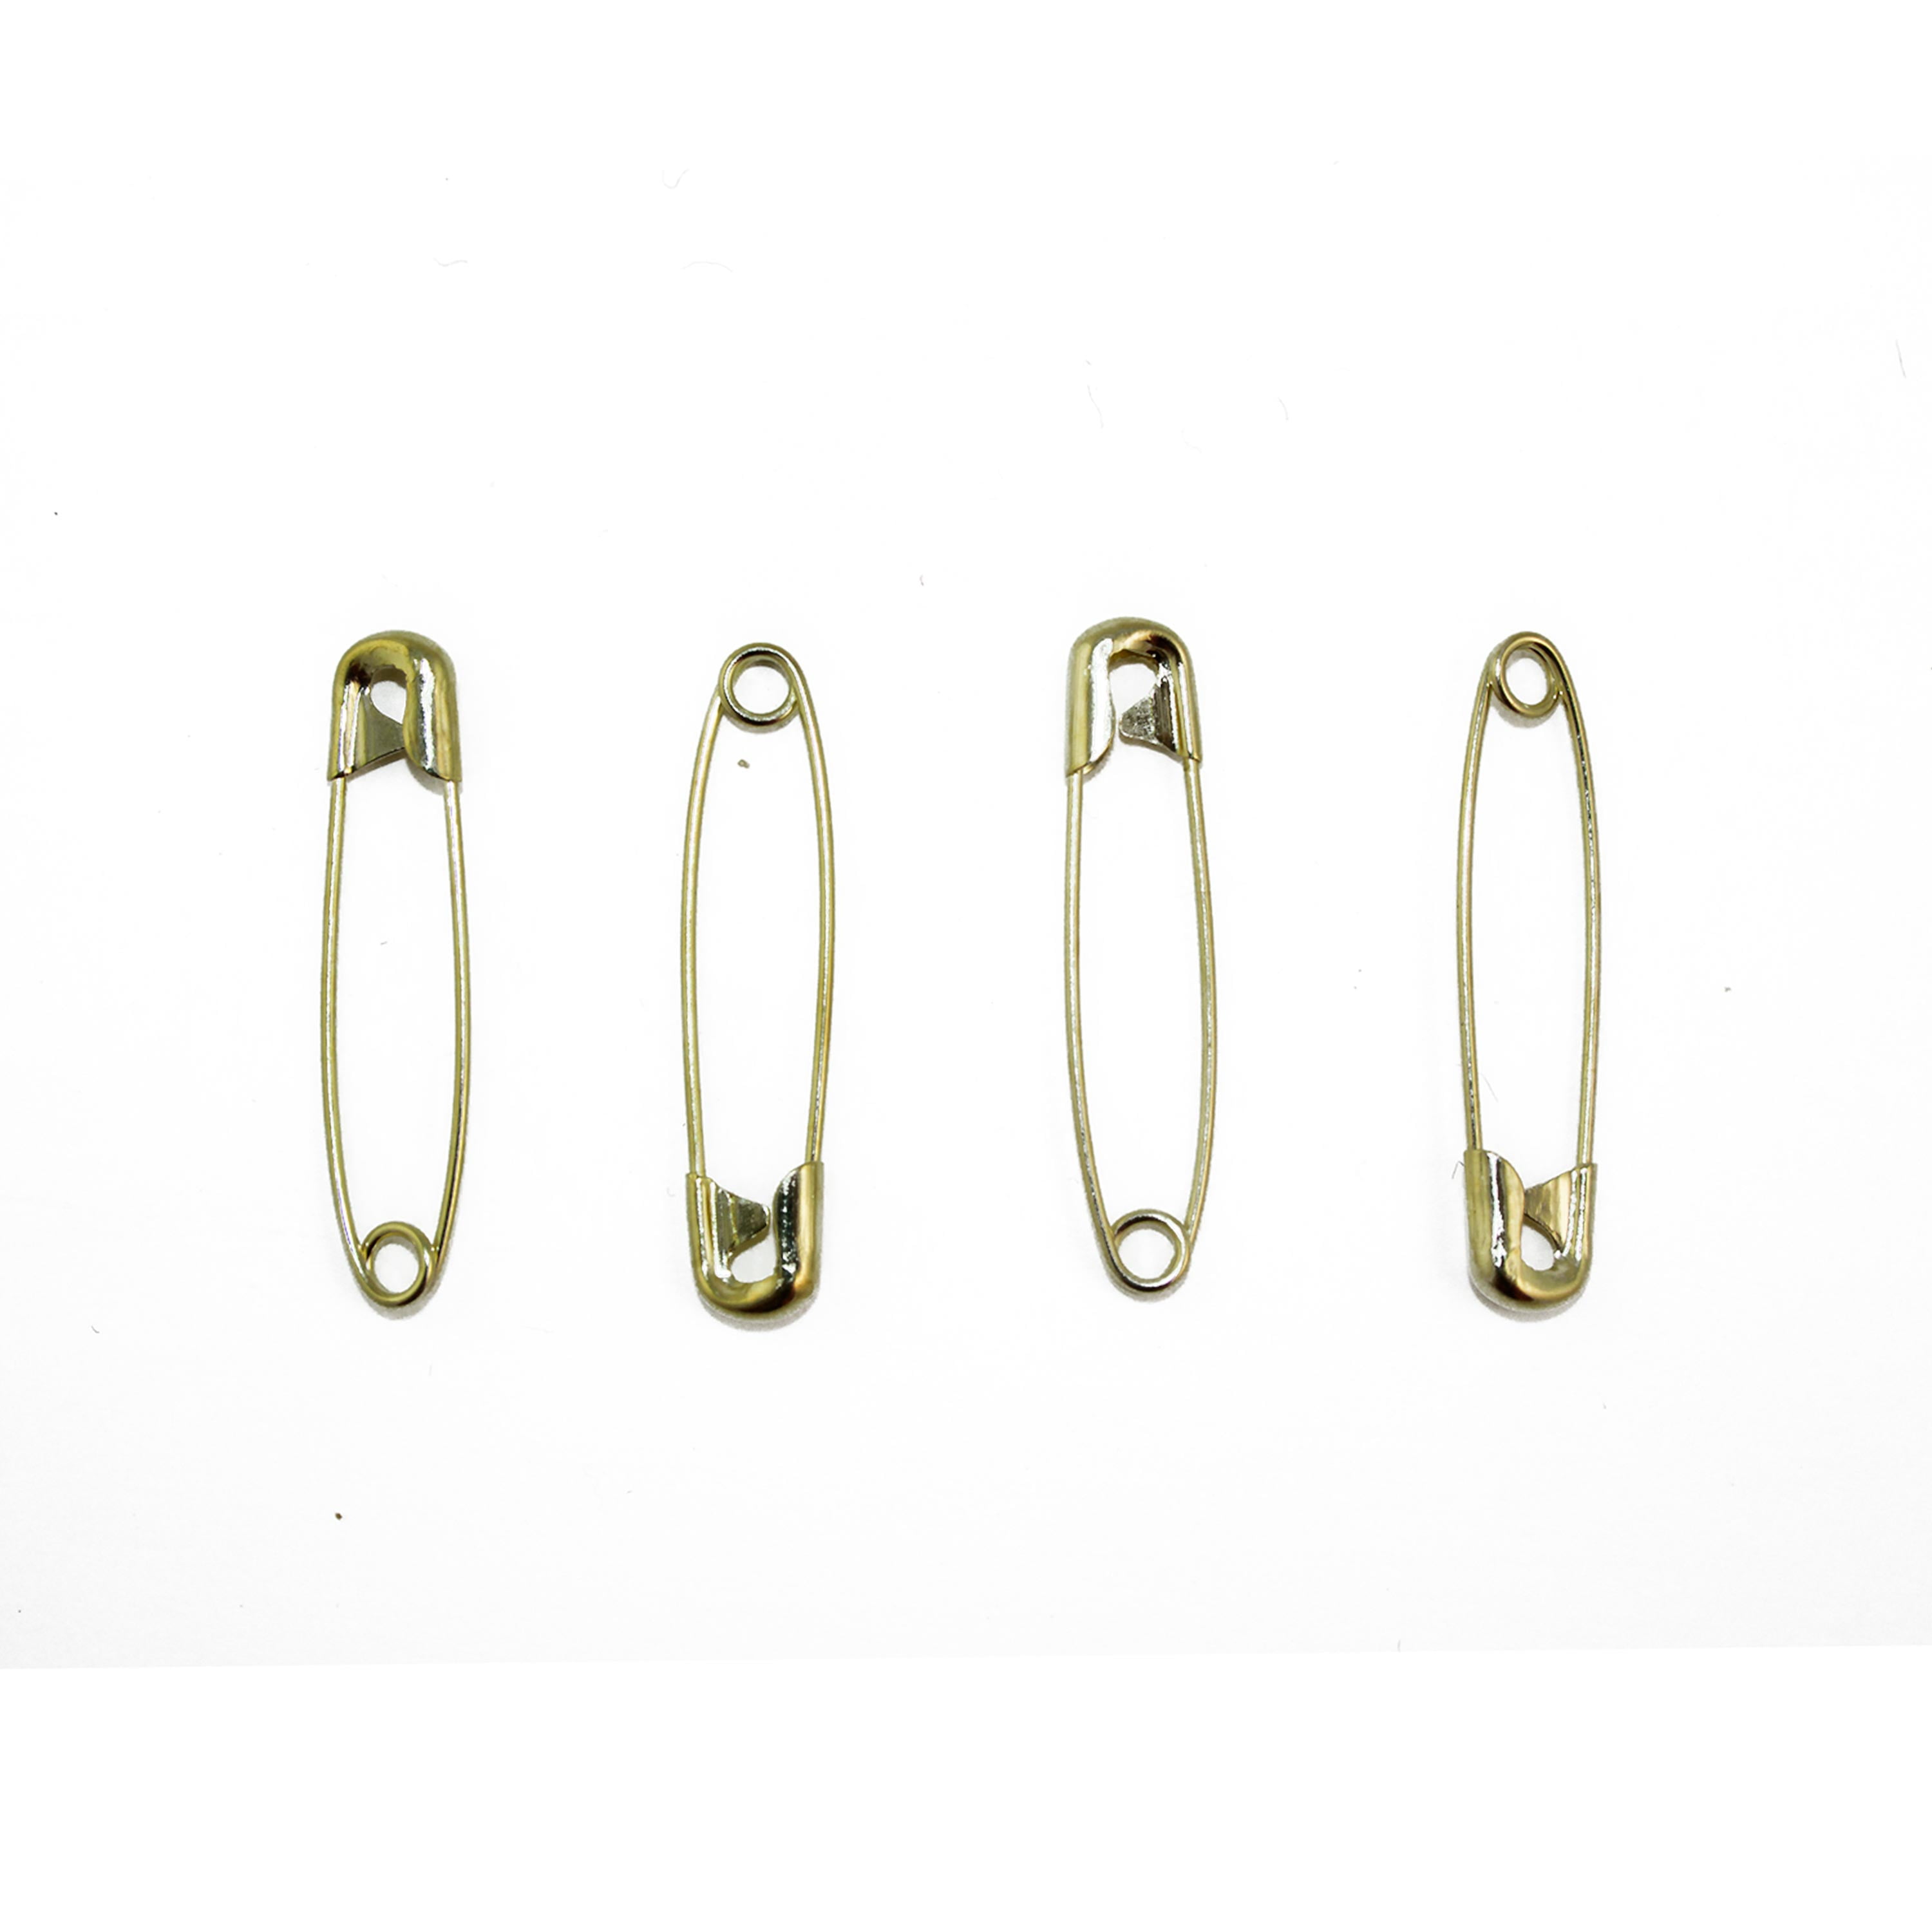 10 Cm Large Safety Pins Rose Gold/gold 1-3 PCS 